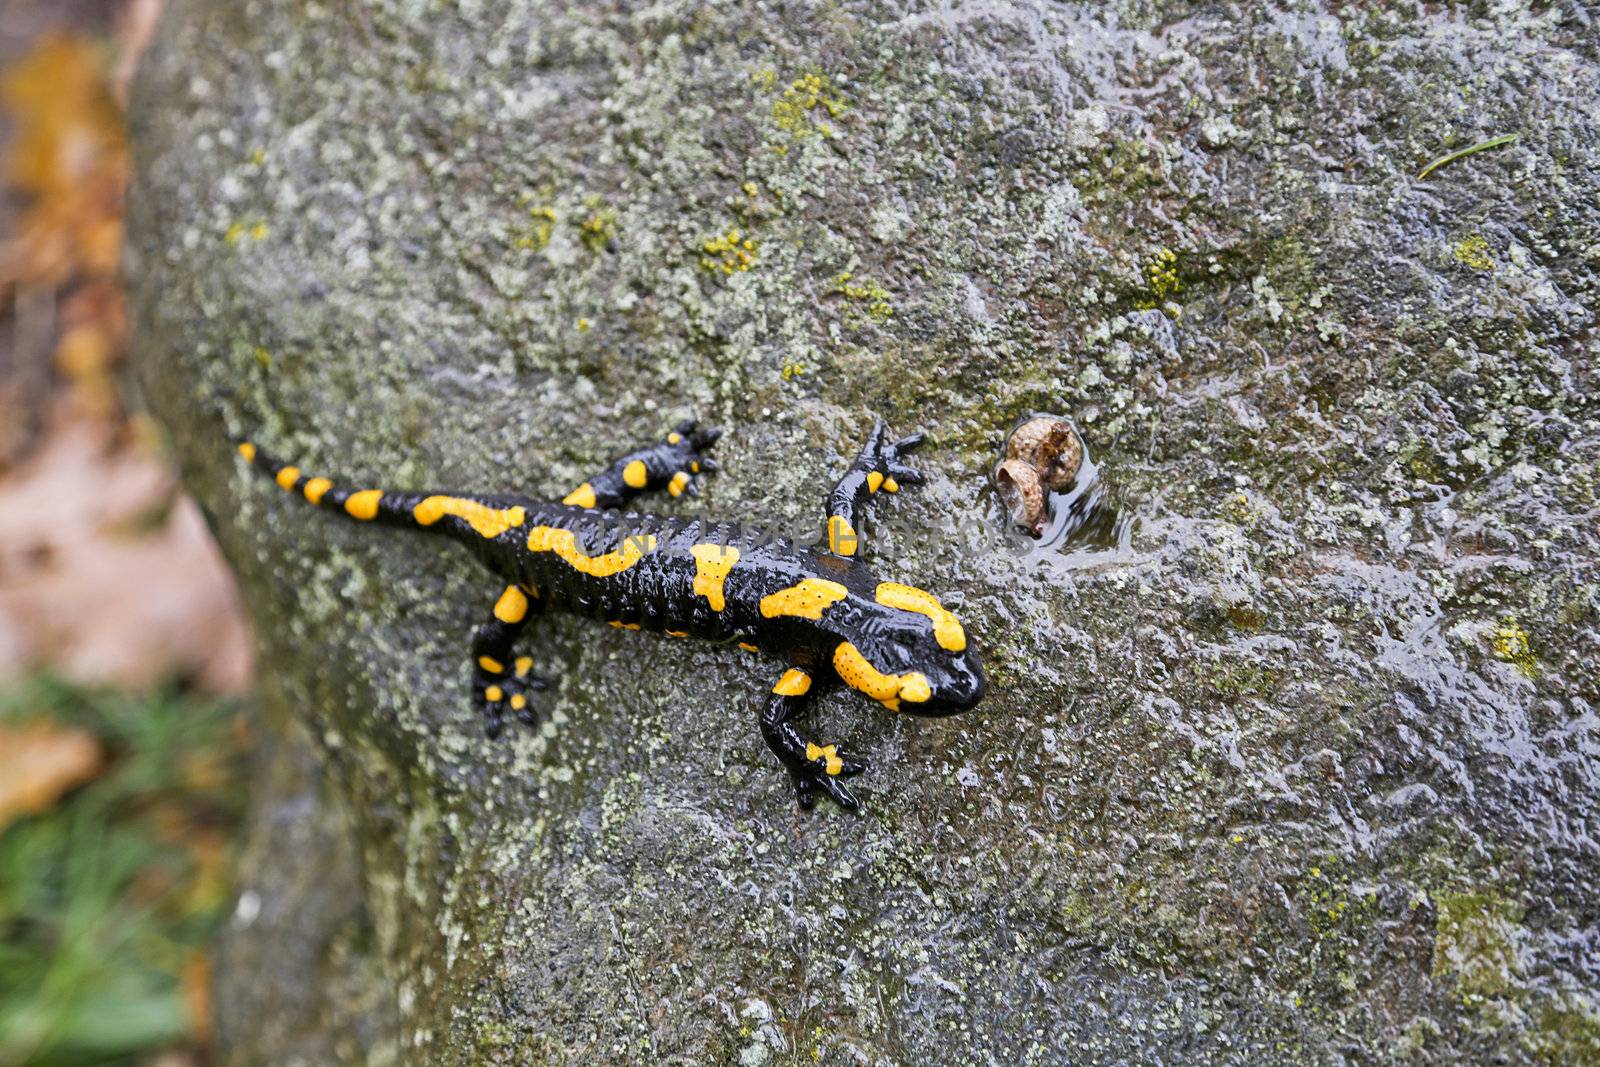 Fire salamander by renegadewanderer